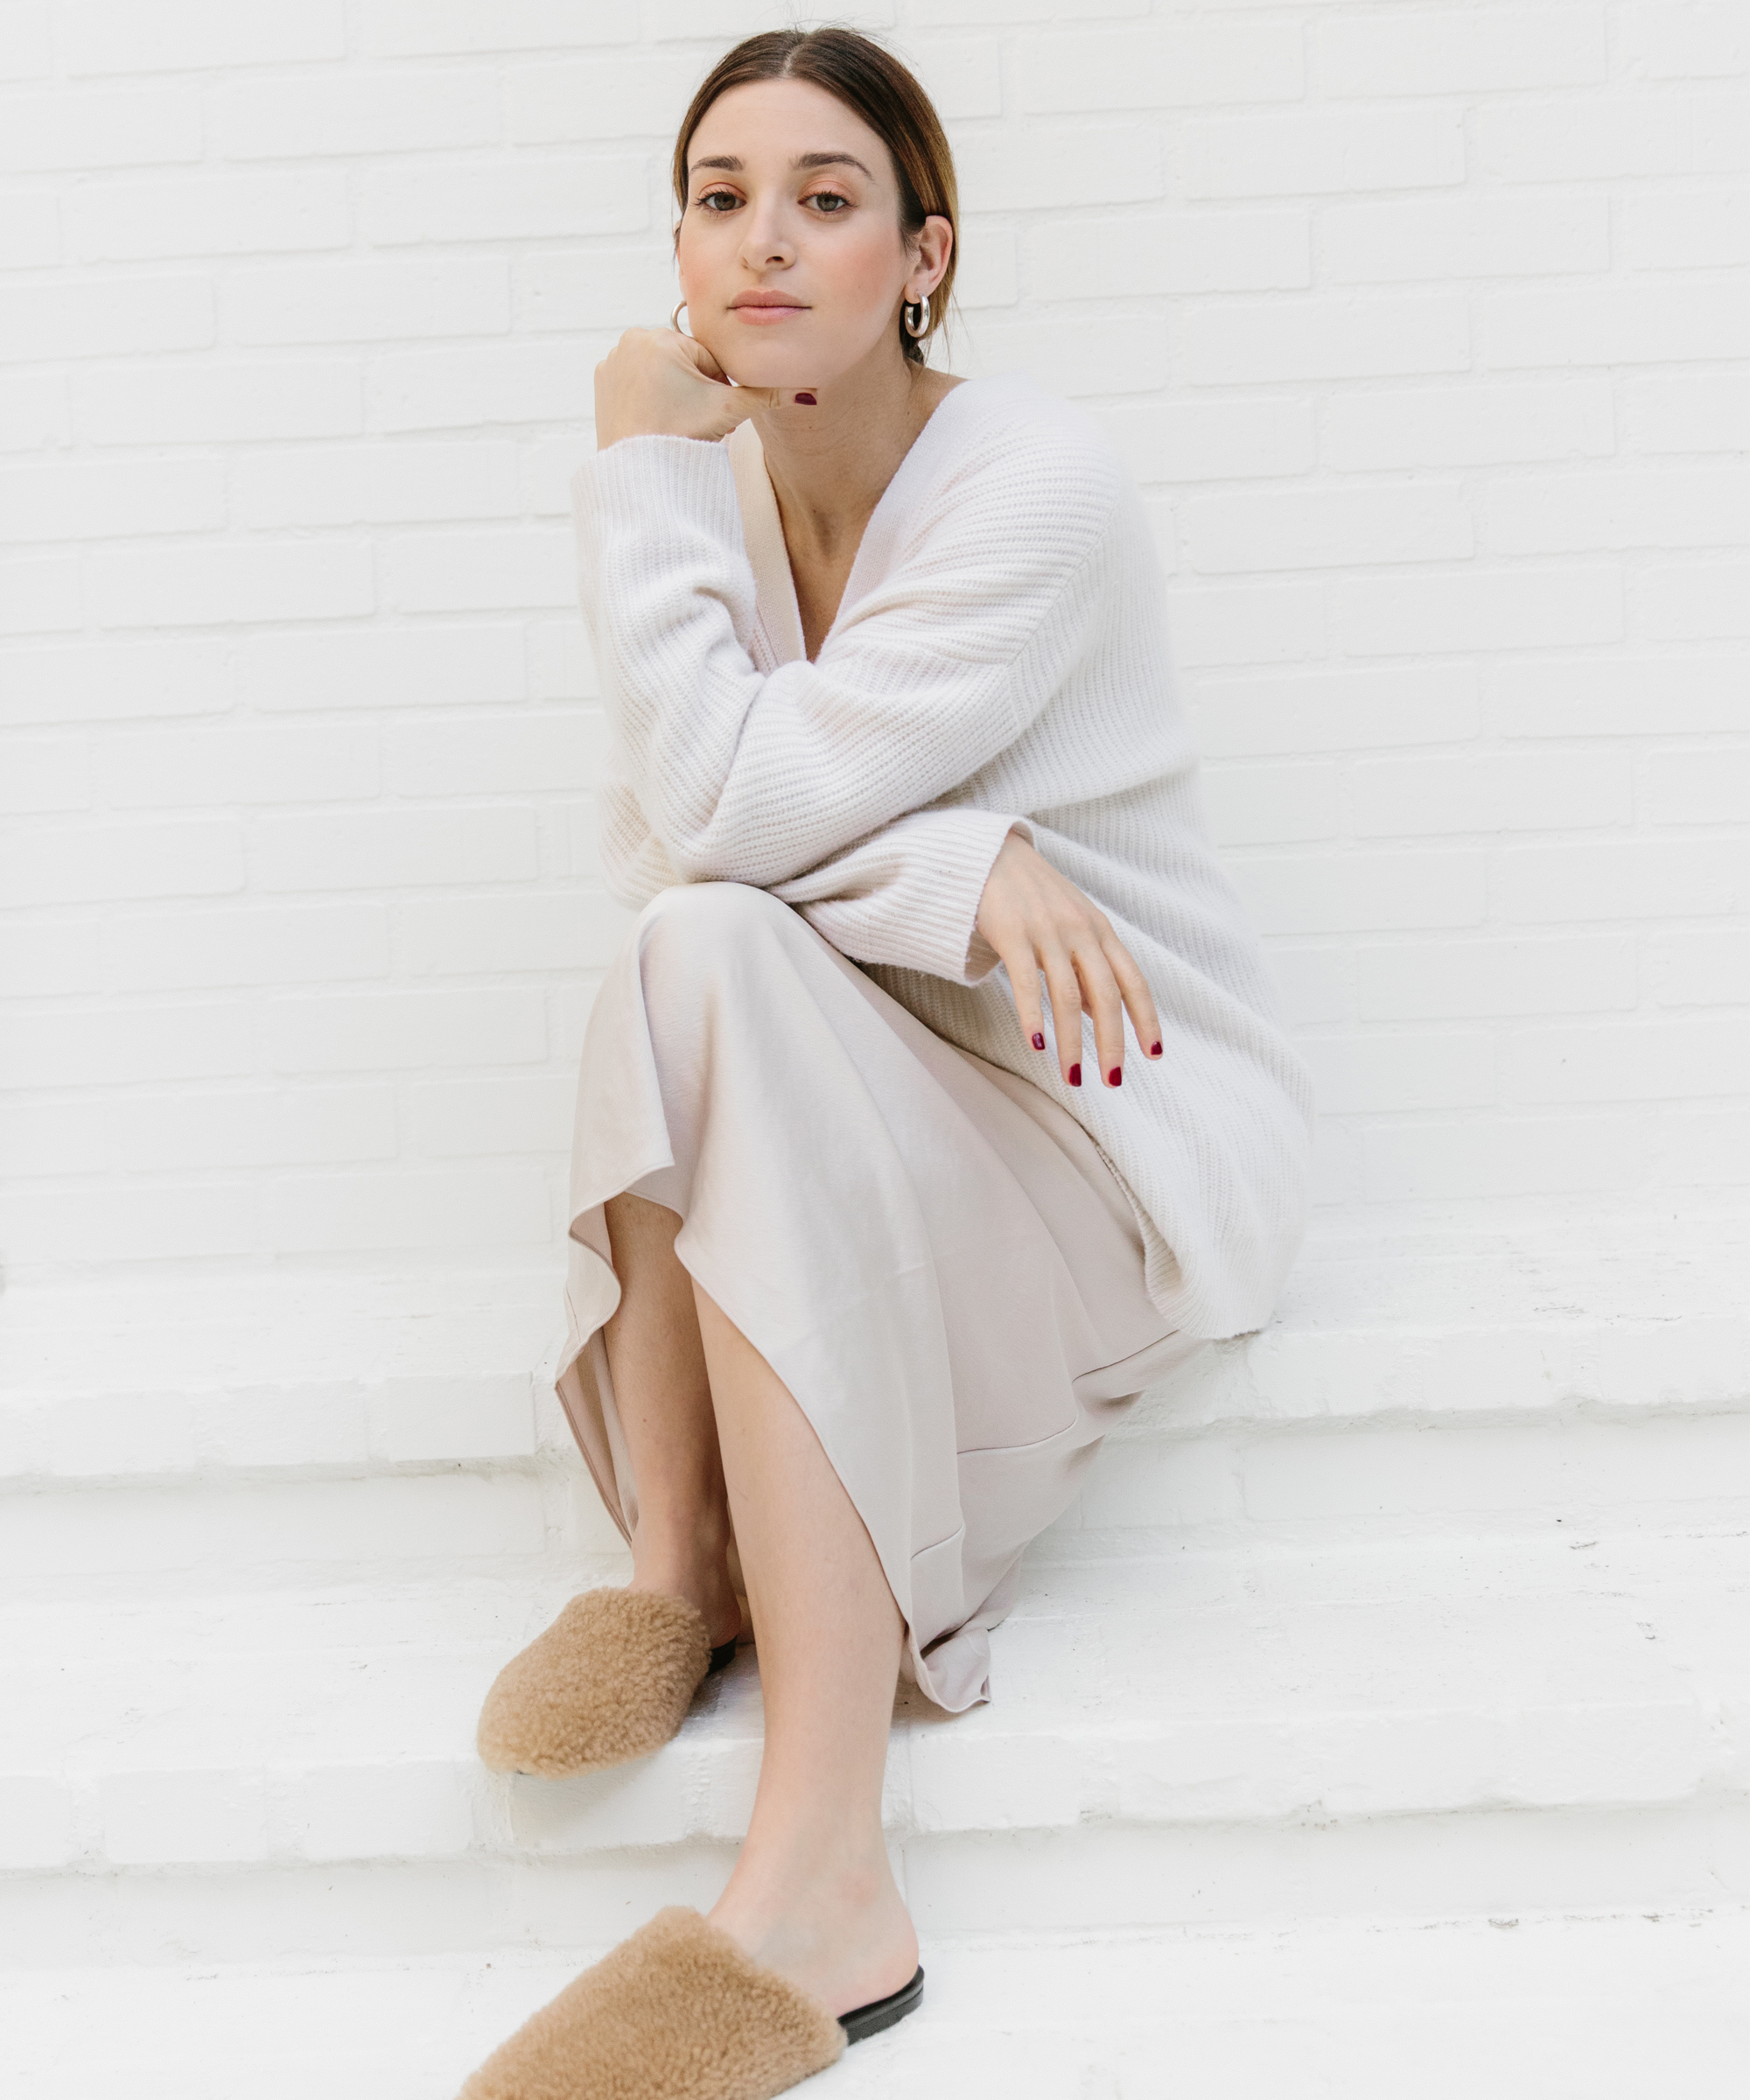 Jamie Mizrahi's Empowered Approach to Getting Dressed – Jenni Kayne